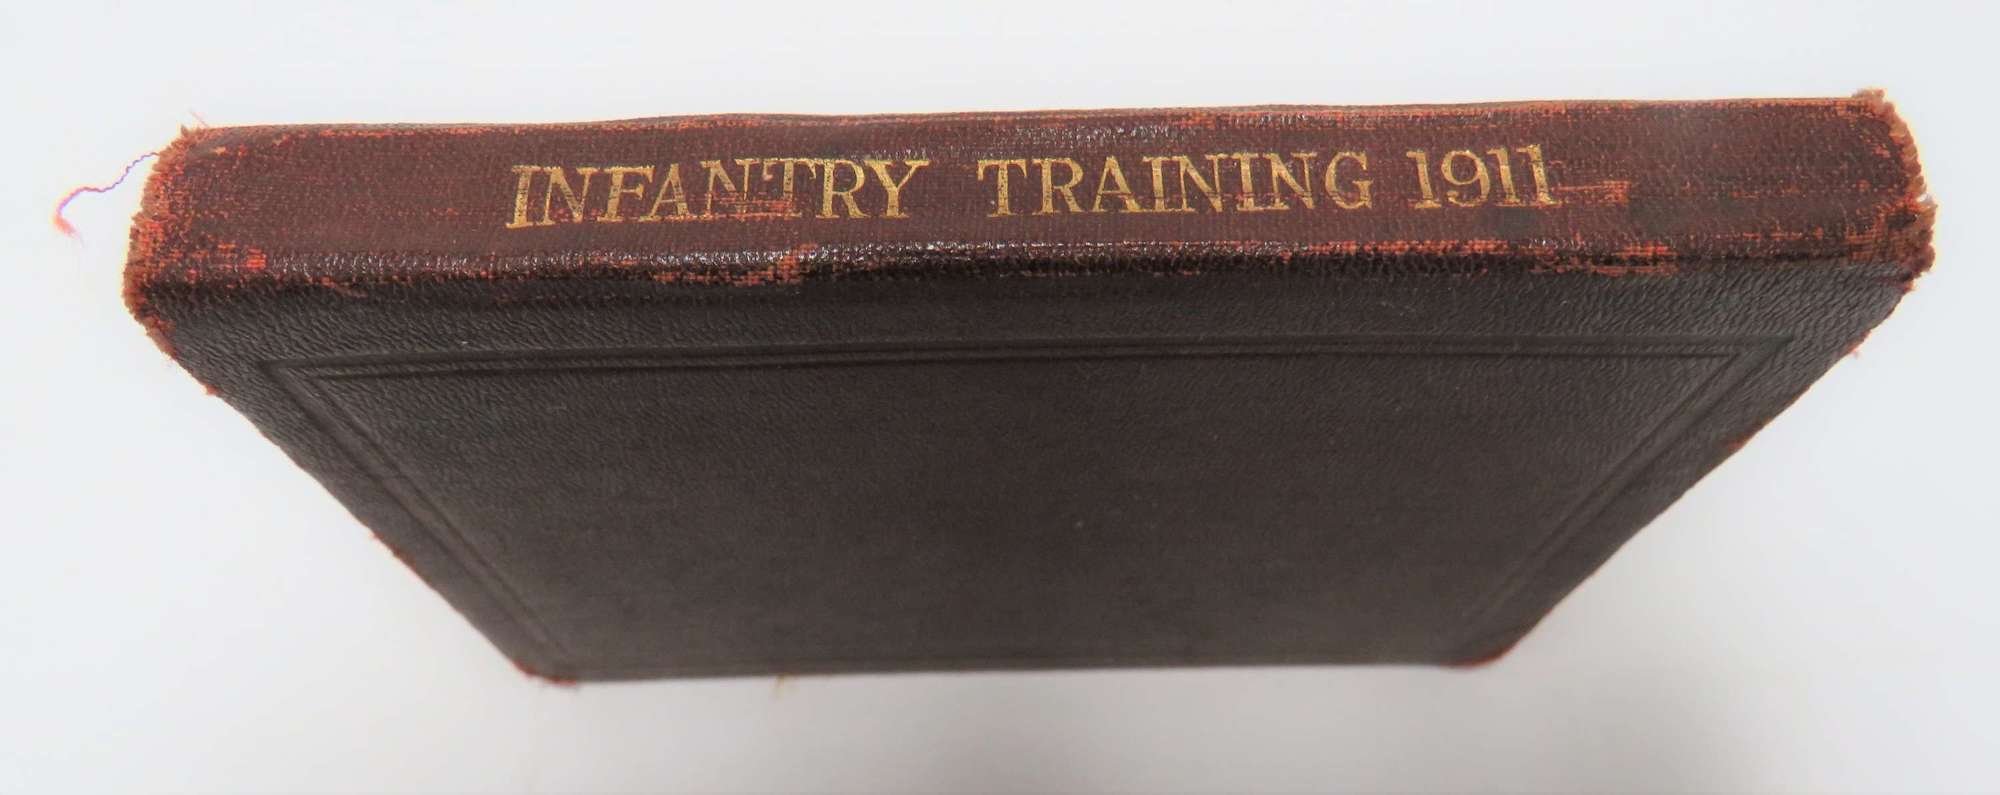 1911 Infantry Training Manual